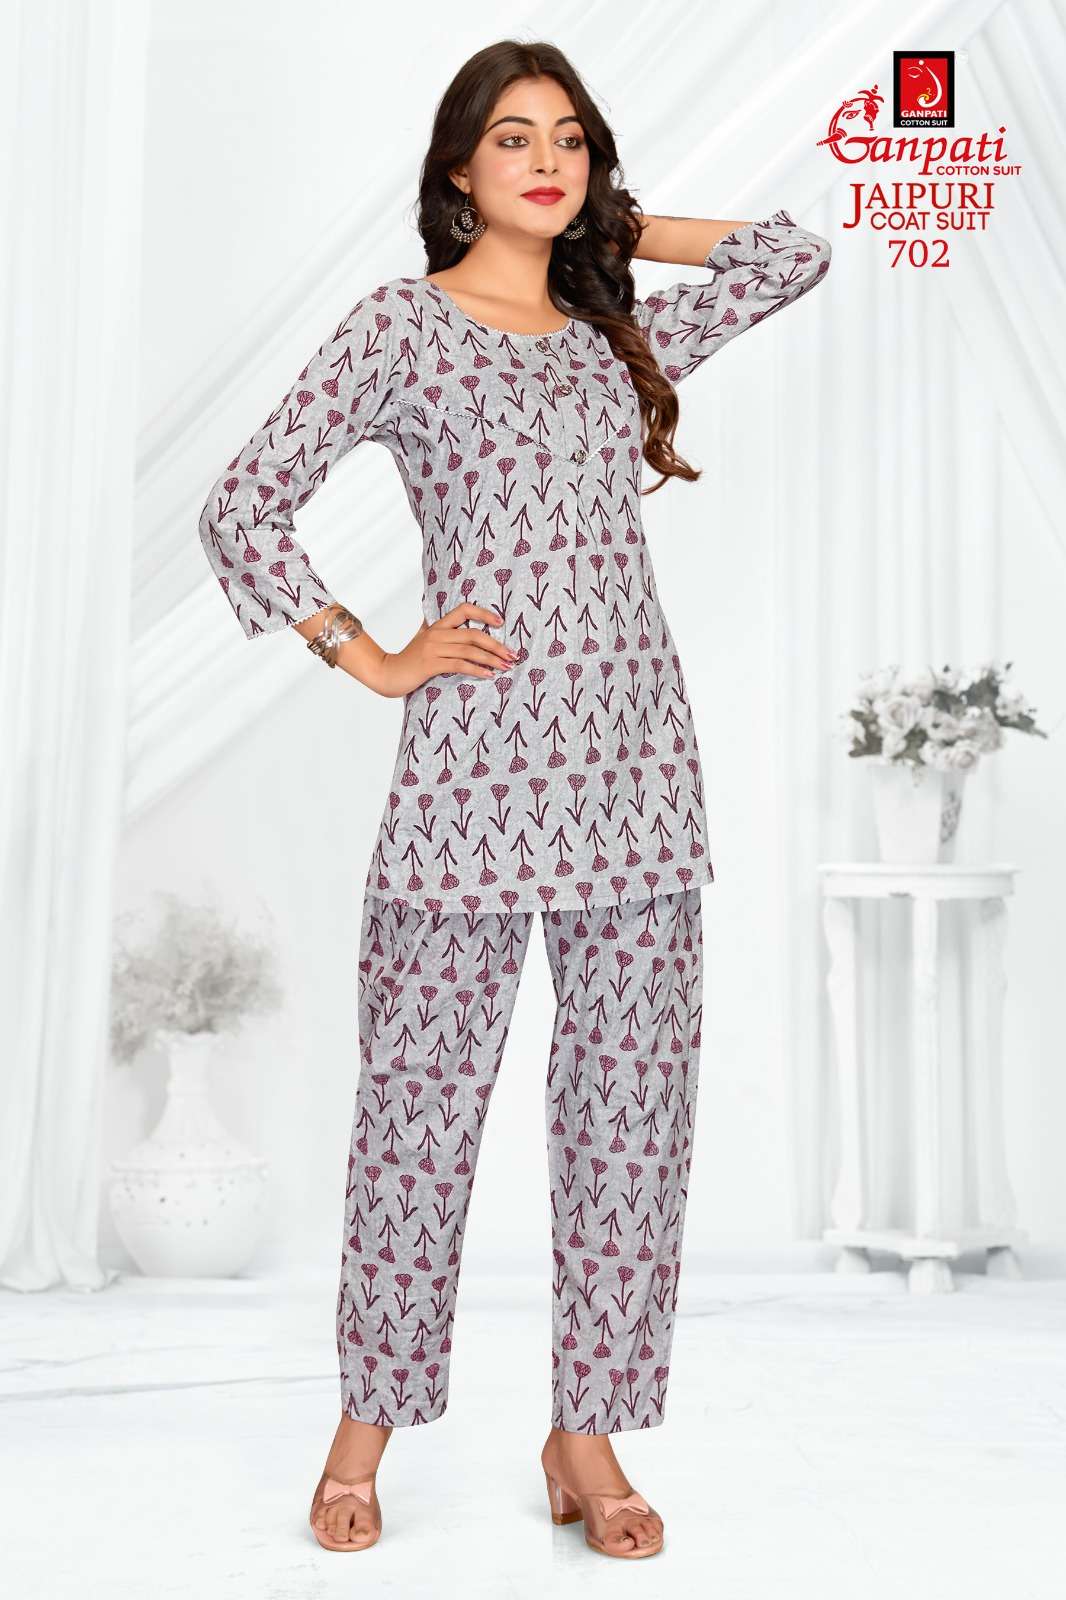 ganpati jaipuri coat suit vol 3 701-715 series latest trendy cord set wholesaler